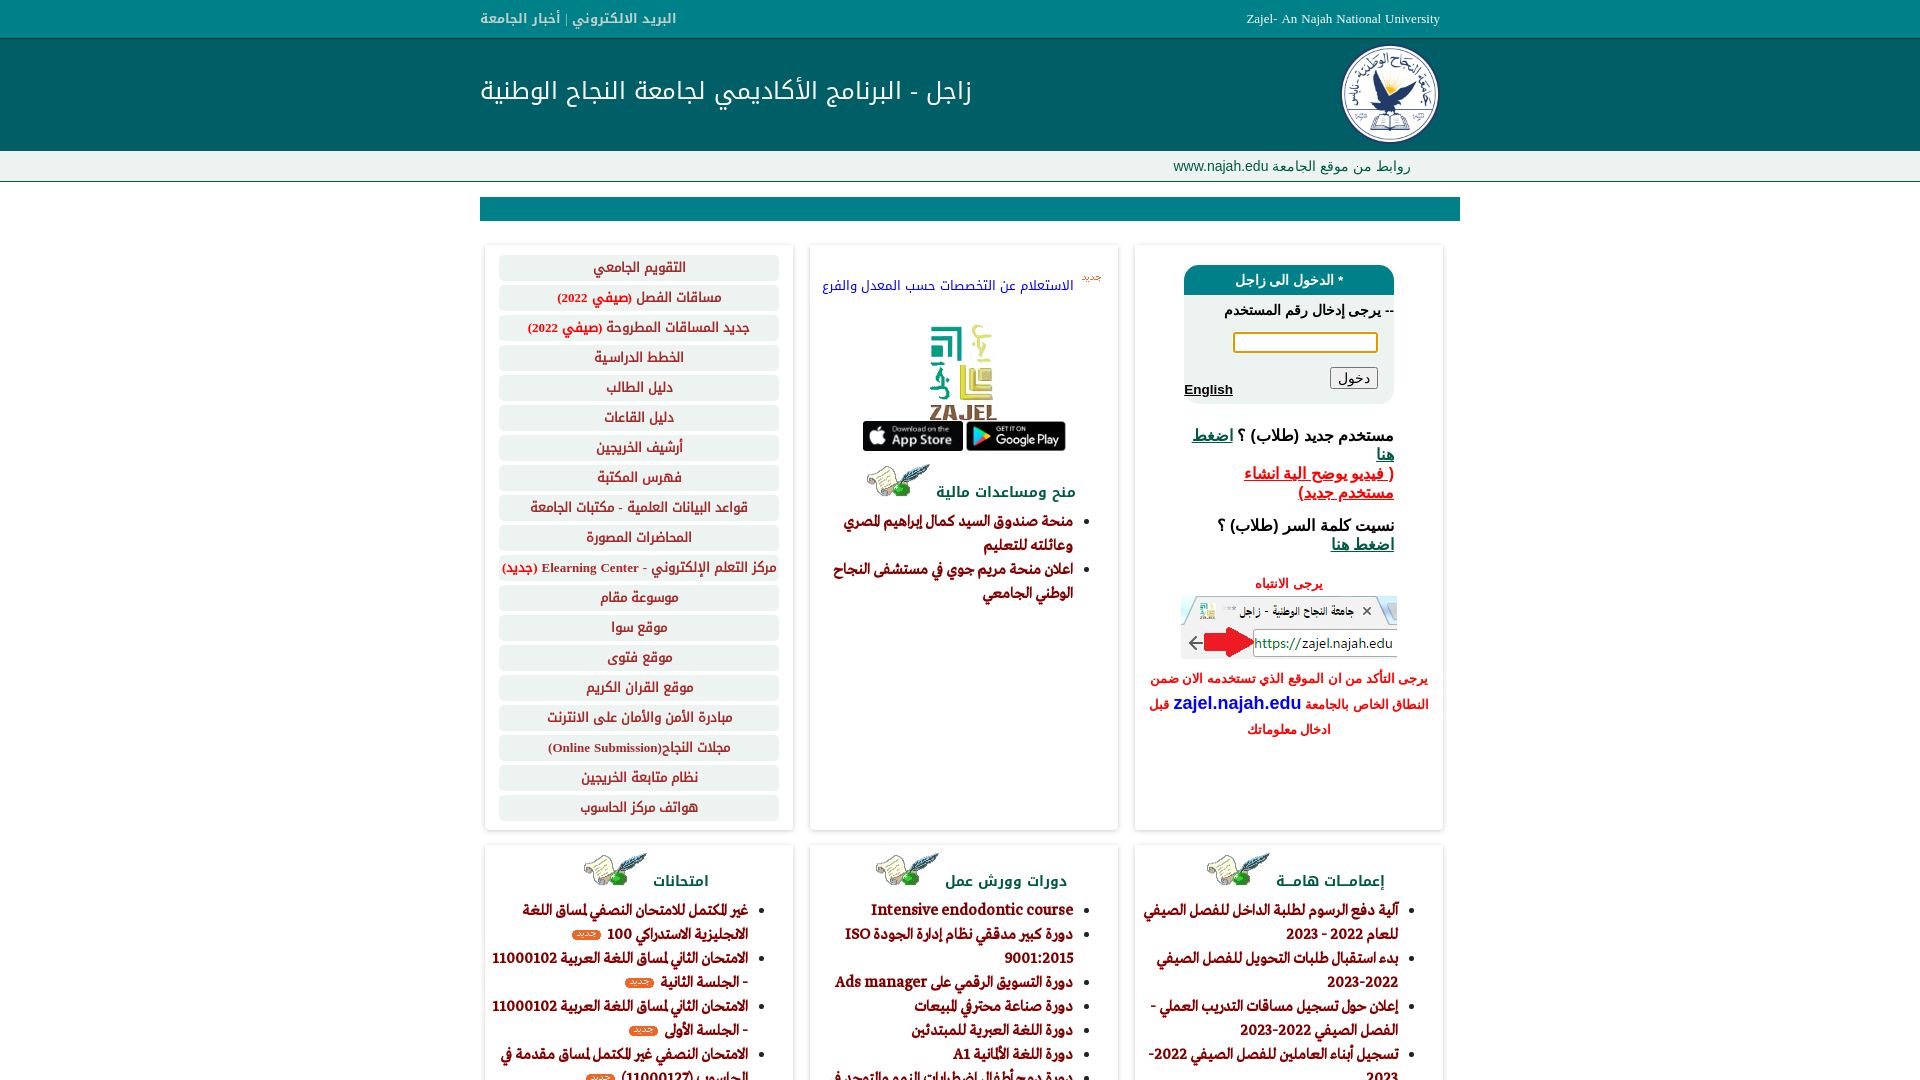 Website status zajel.najah.edu is   ONLINE